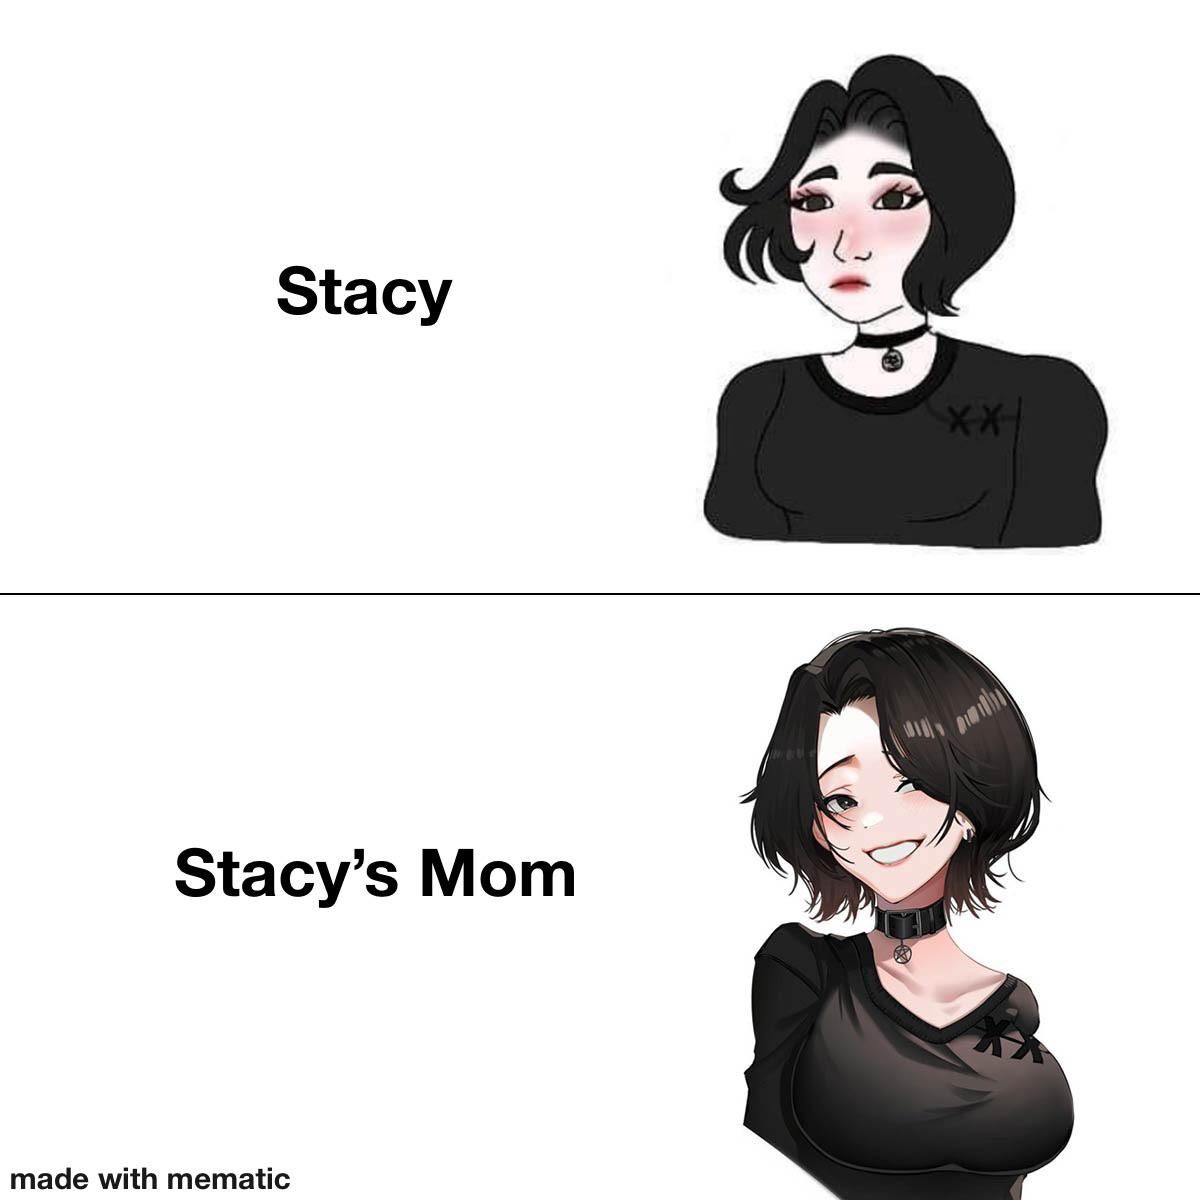 Stacy’s mom..